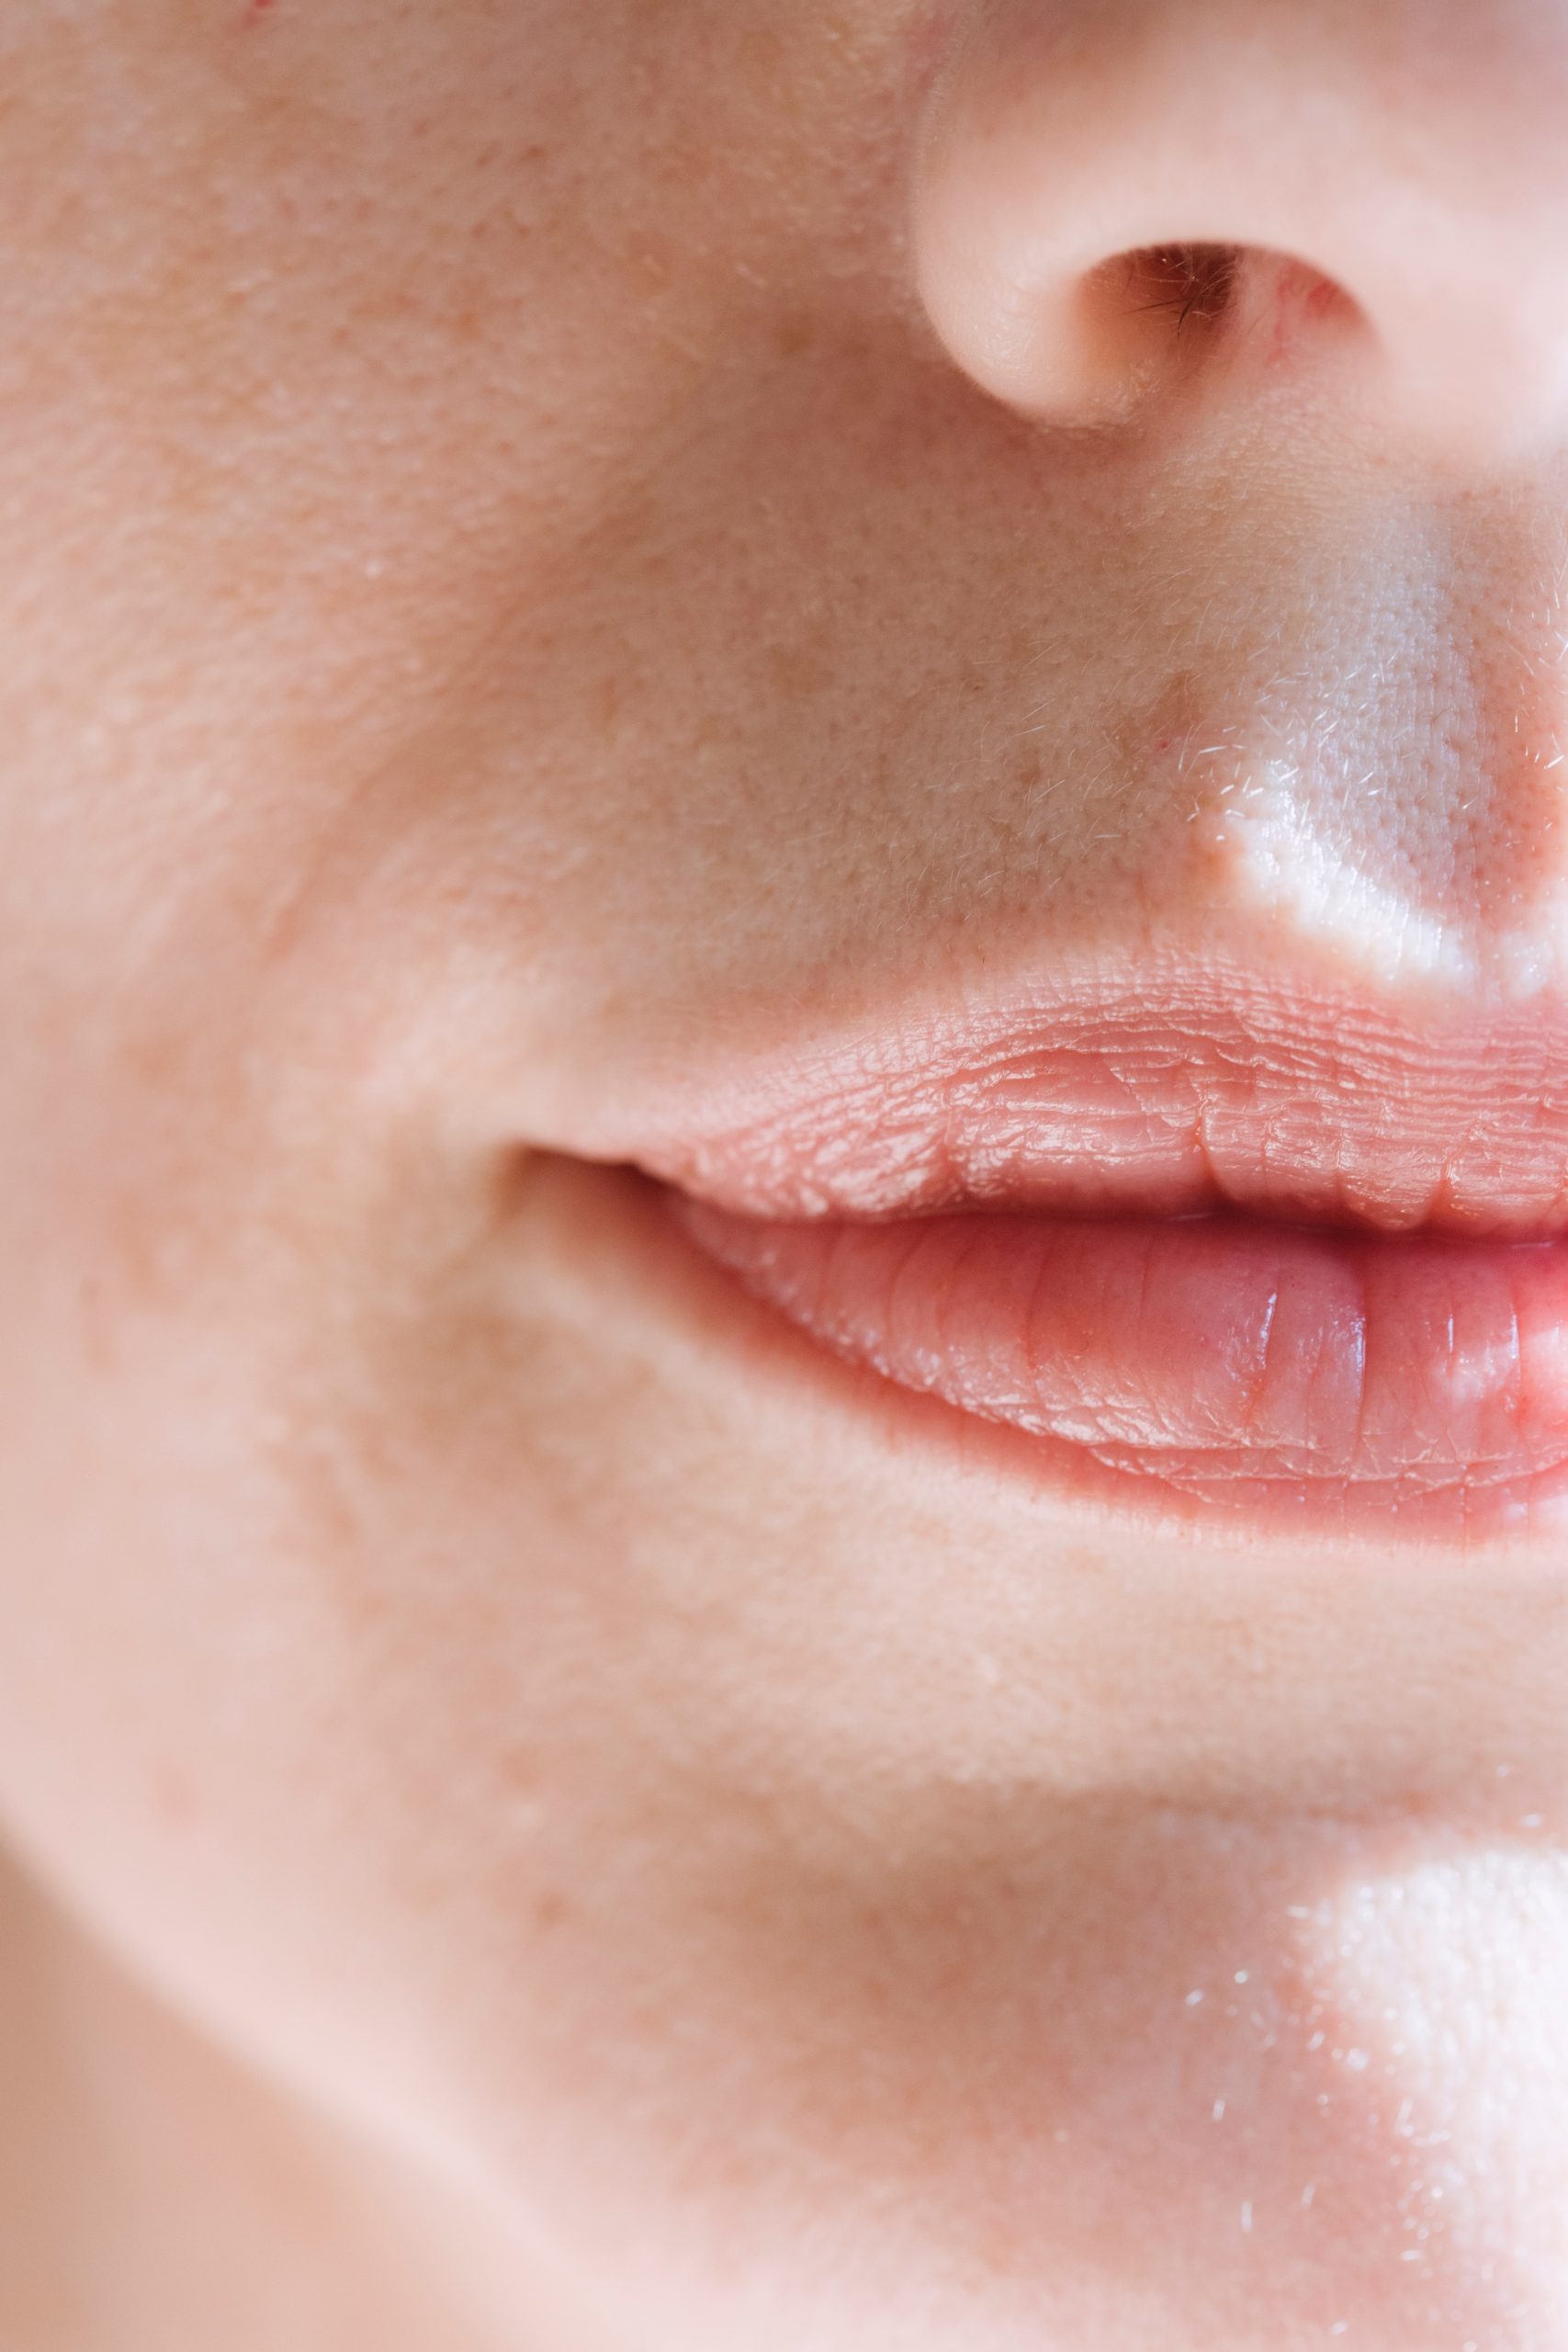 4) Lip Flip: The Benefits of Having a Lip Flip Near Me